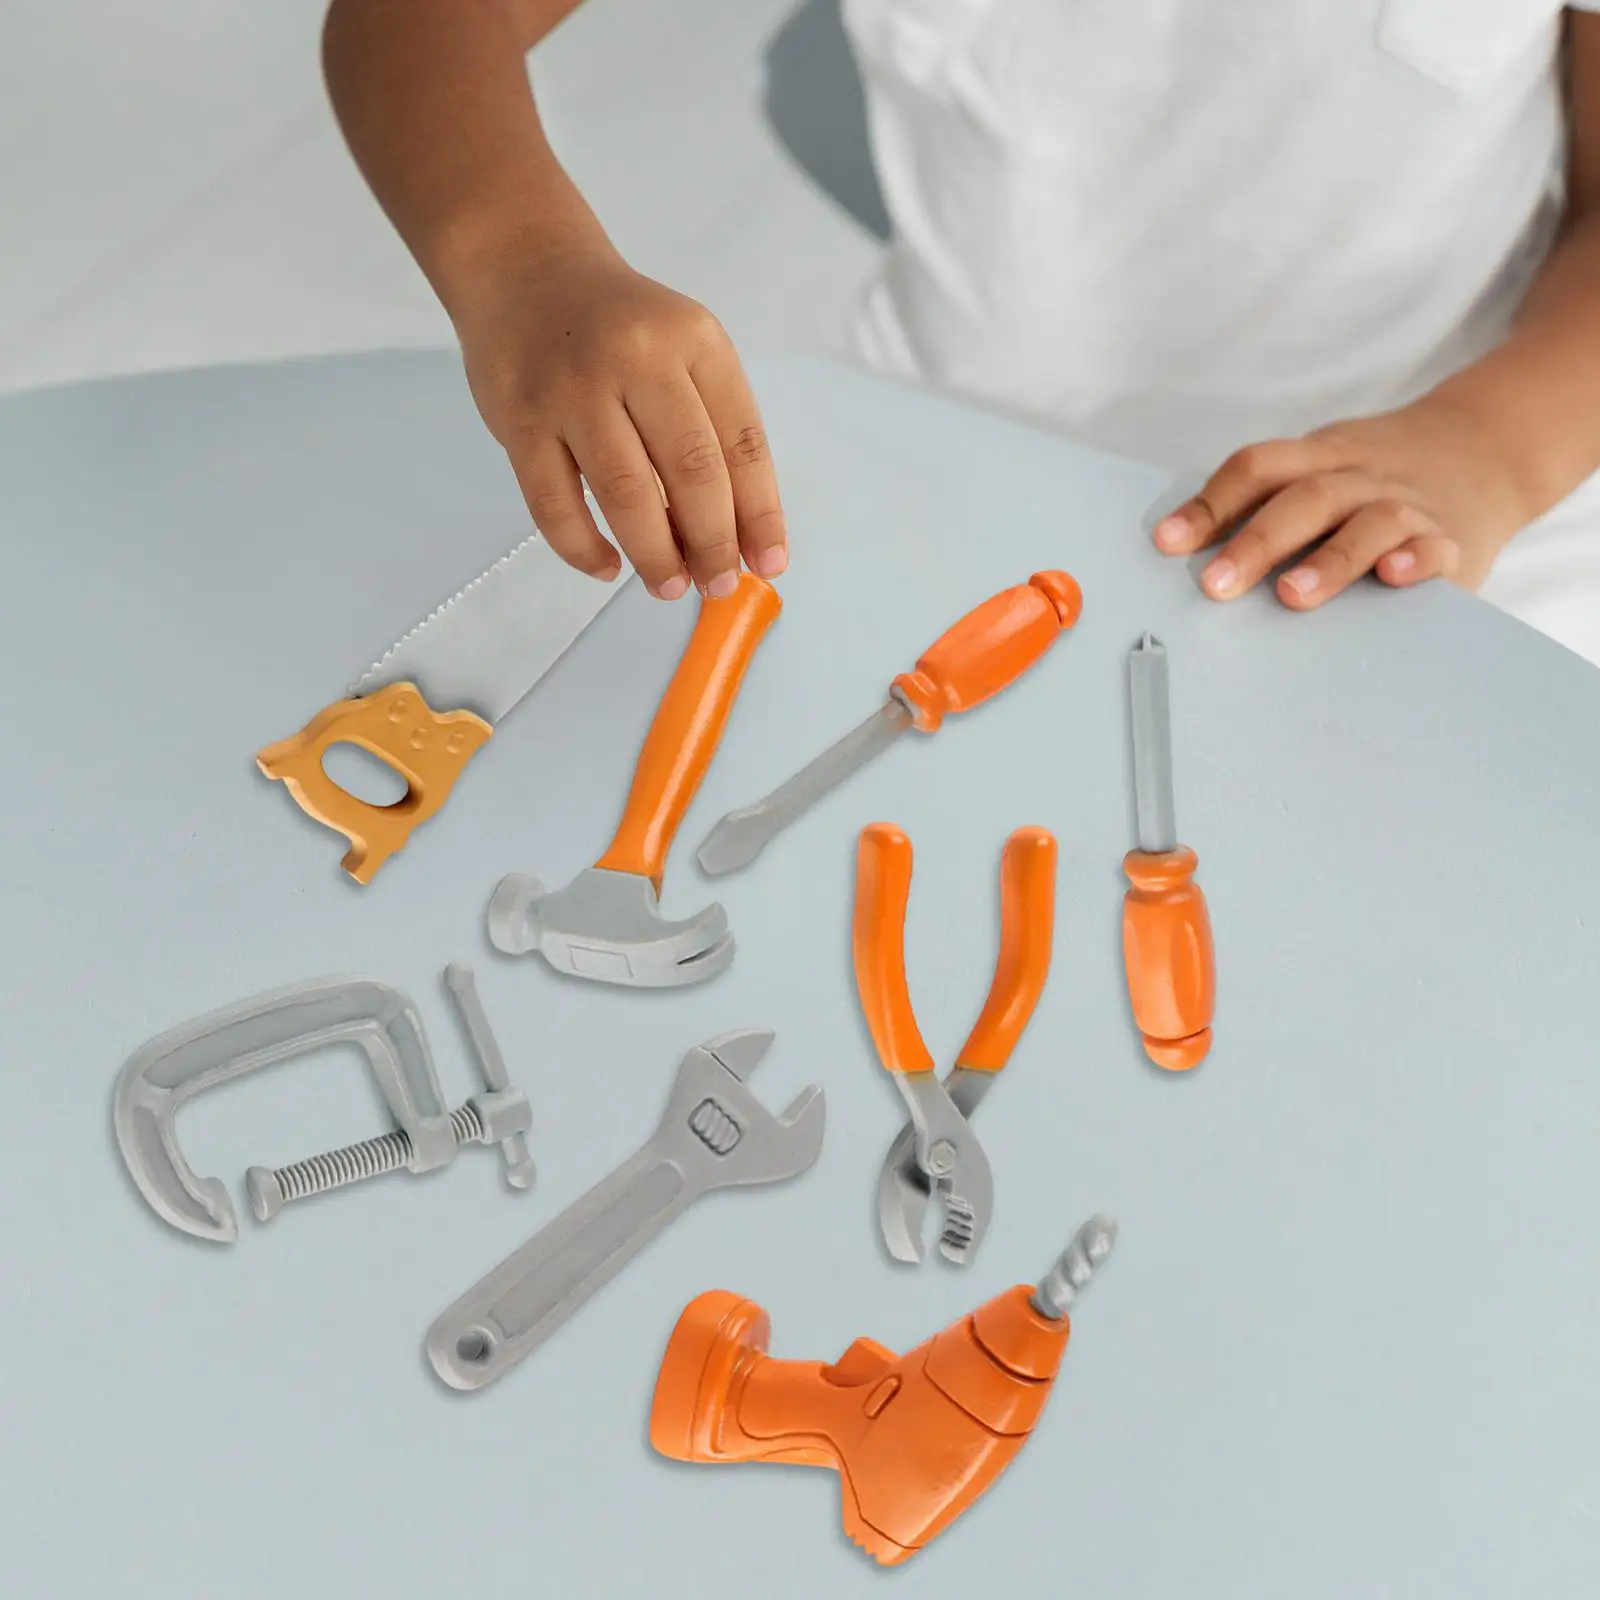 8x Construction Party Supplies Fine Motor Skills Montessori Play Tool Set for Preschool Party Toys Birthday Gift Boys Girls